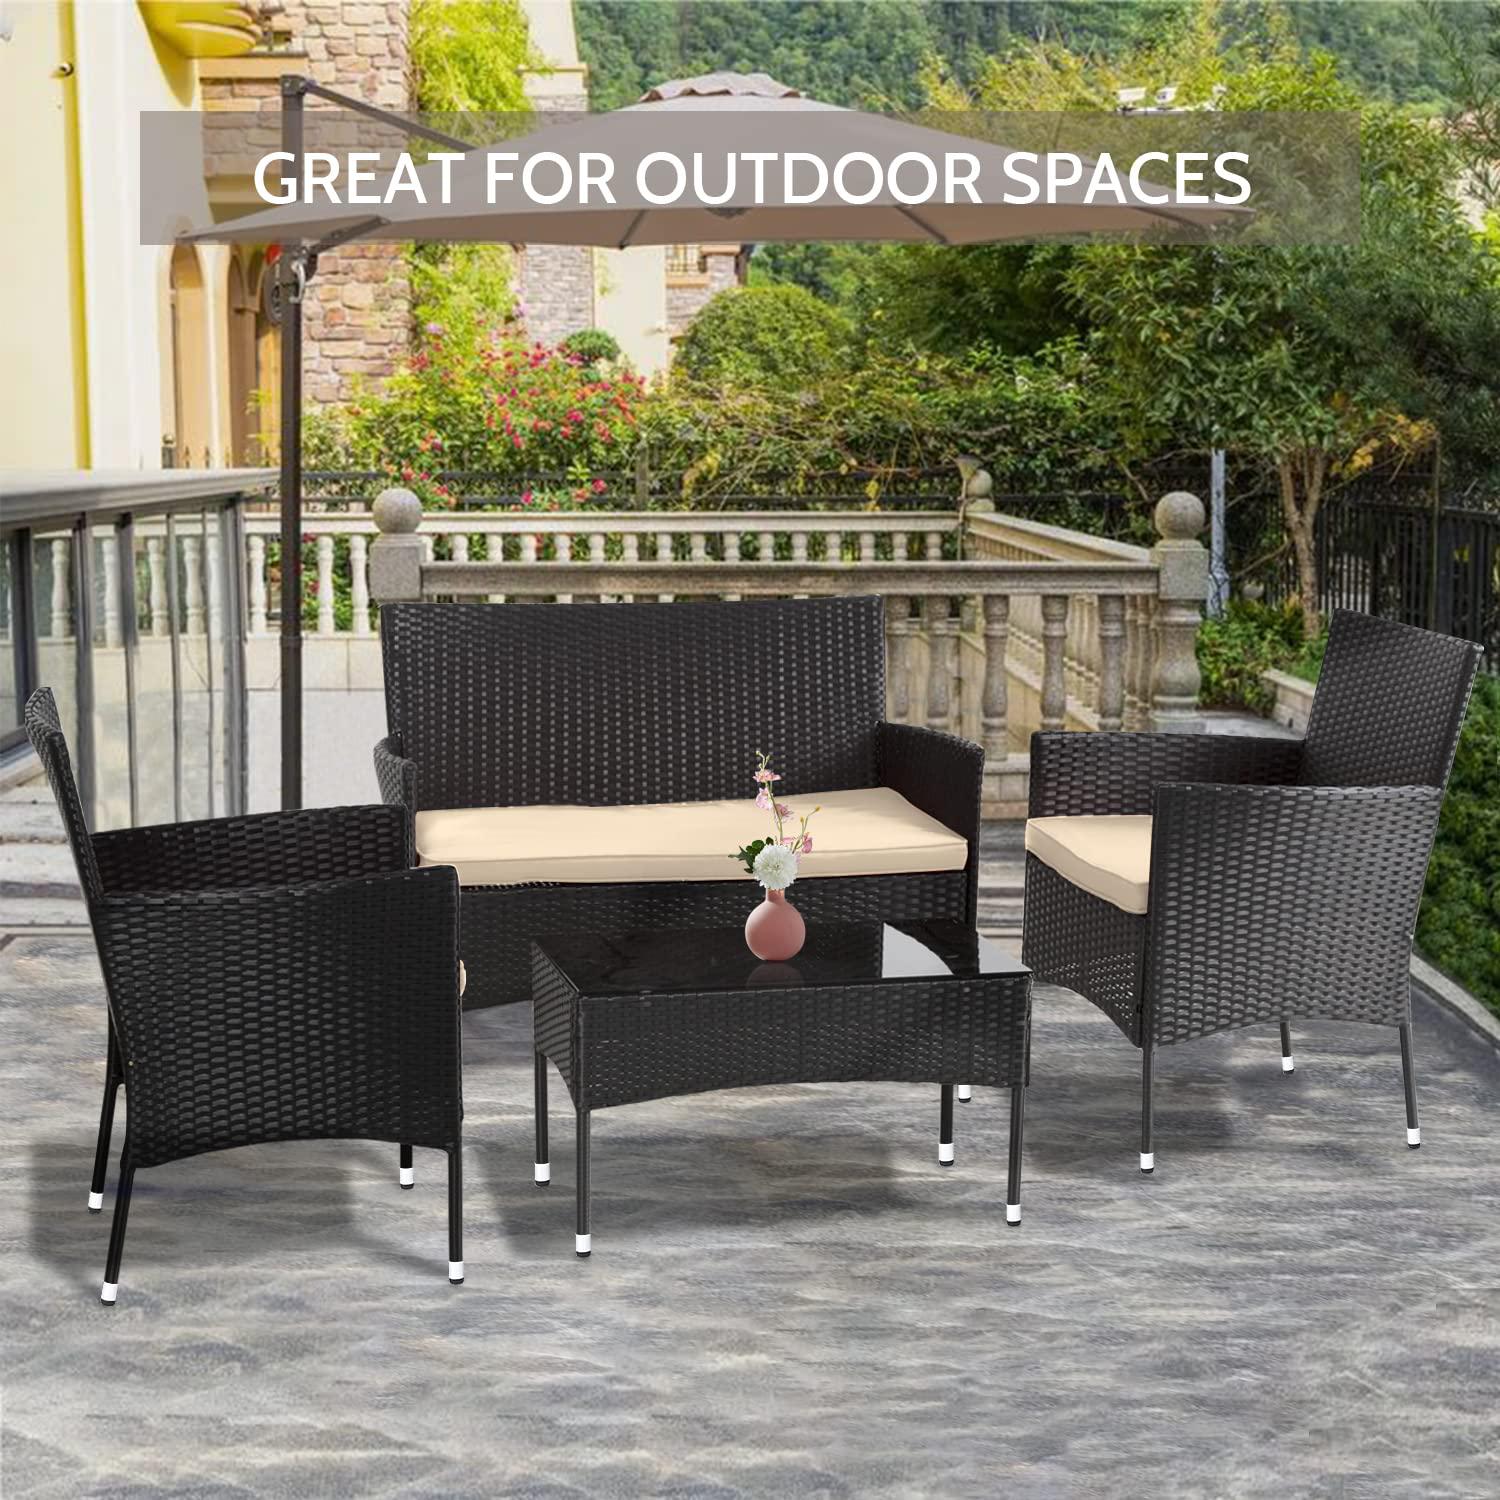 fdw patio furniture set 4 pieces outdoor rattan chair wicker sofa garden conversation bistro sets for yard,pool or backyard